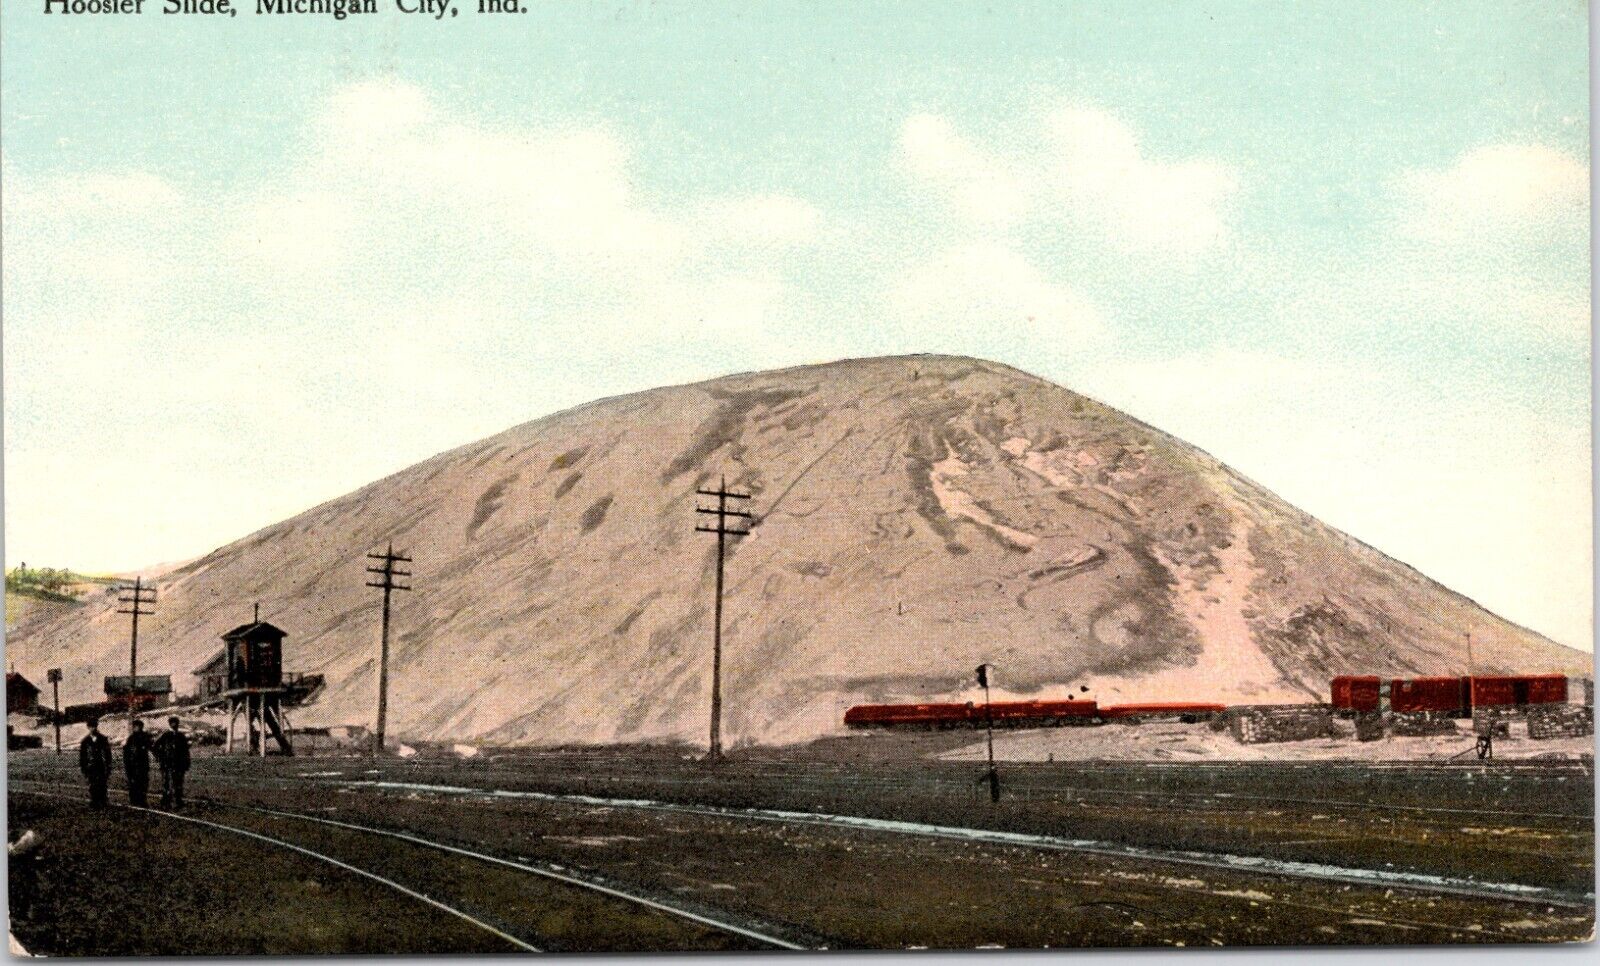 C.1910s Michigan City IN Hoosier Slide Rail Yard Track UNP Indiana Postcard A522